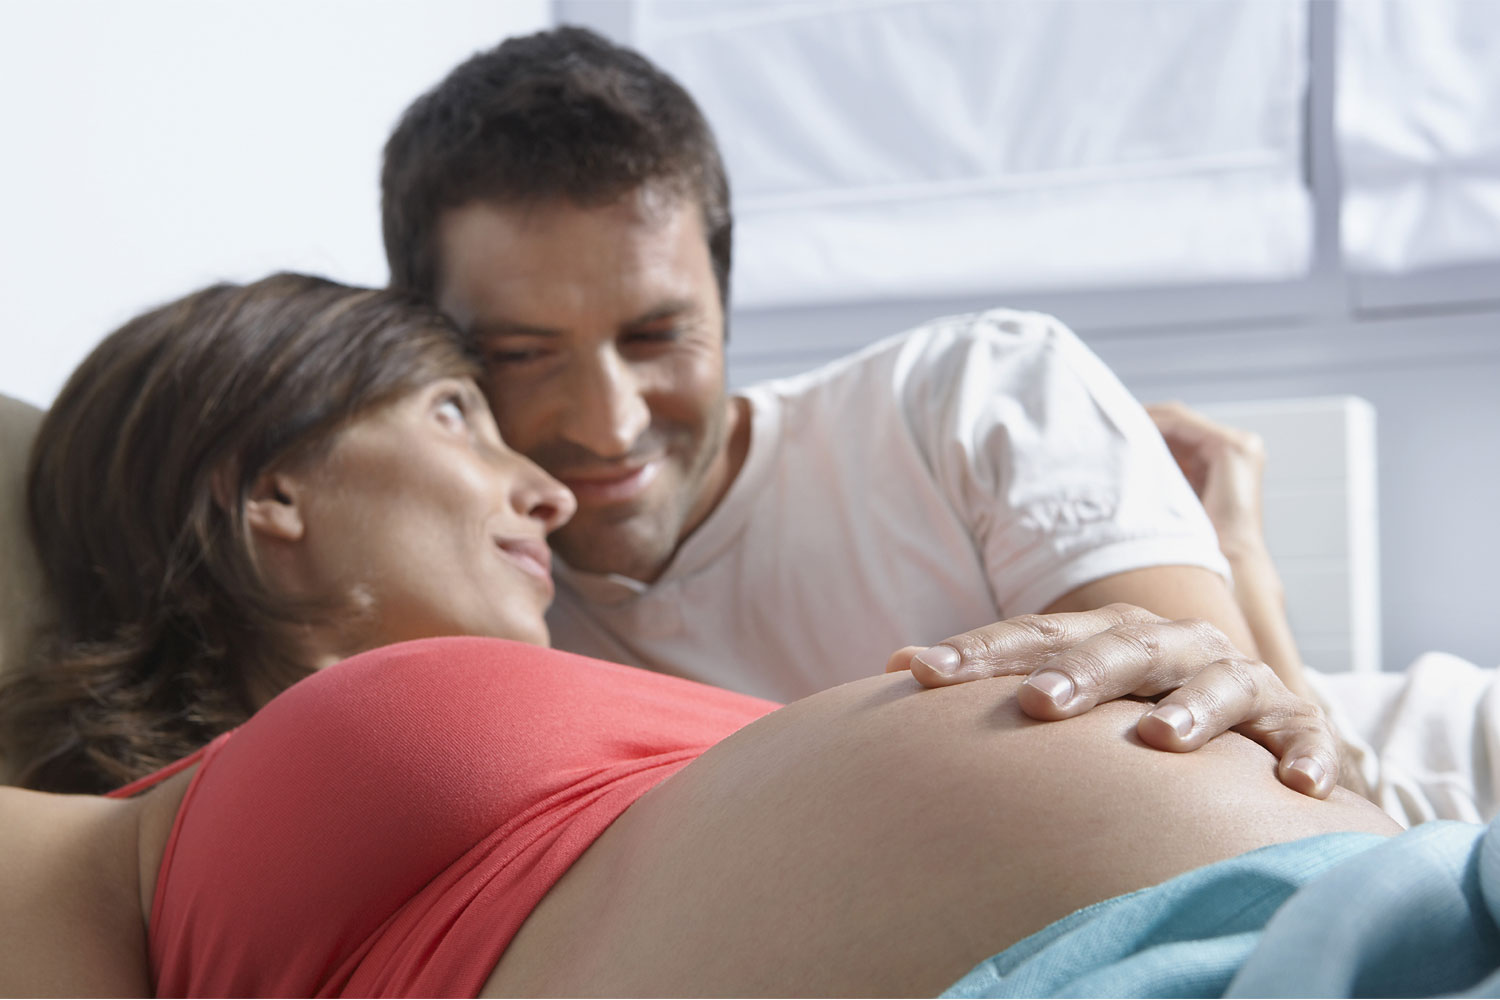 Can You Use A Vibrator When Pregnant?